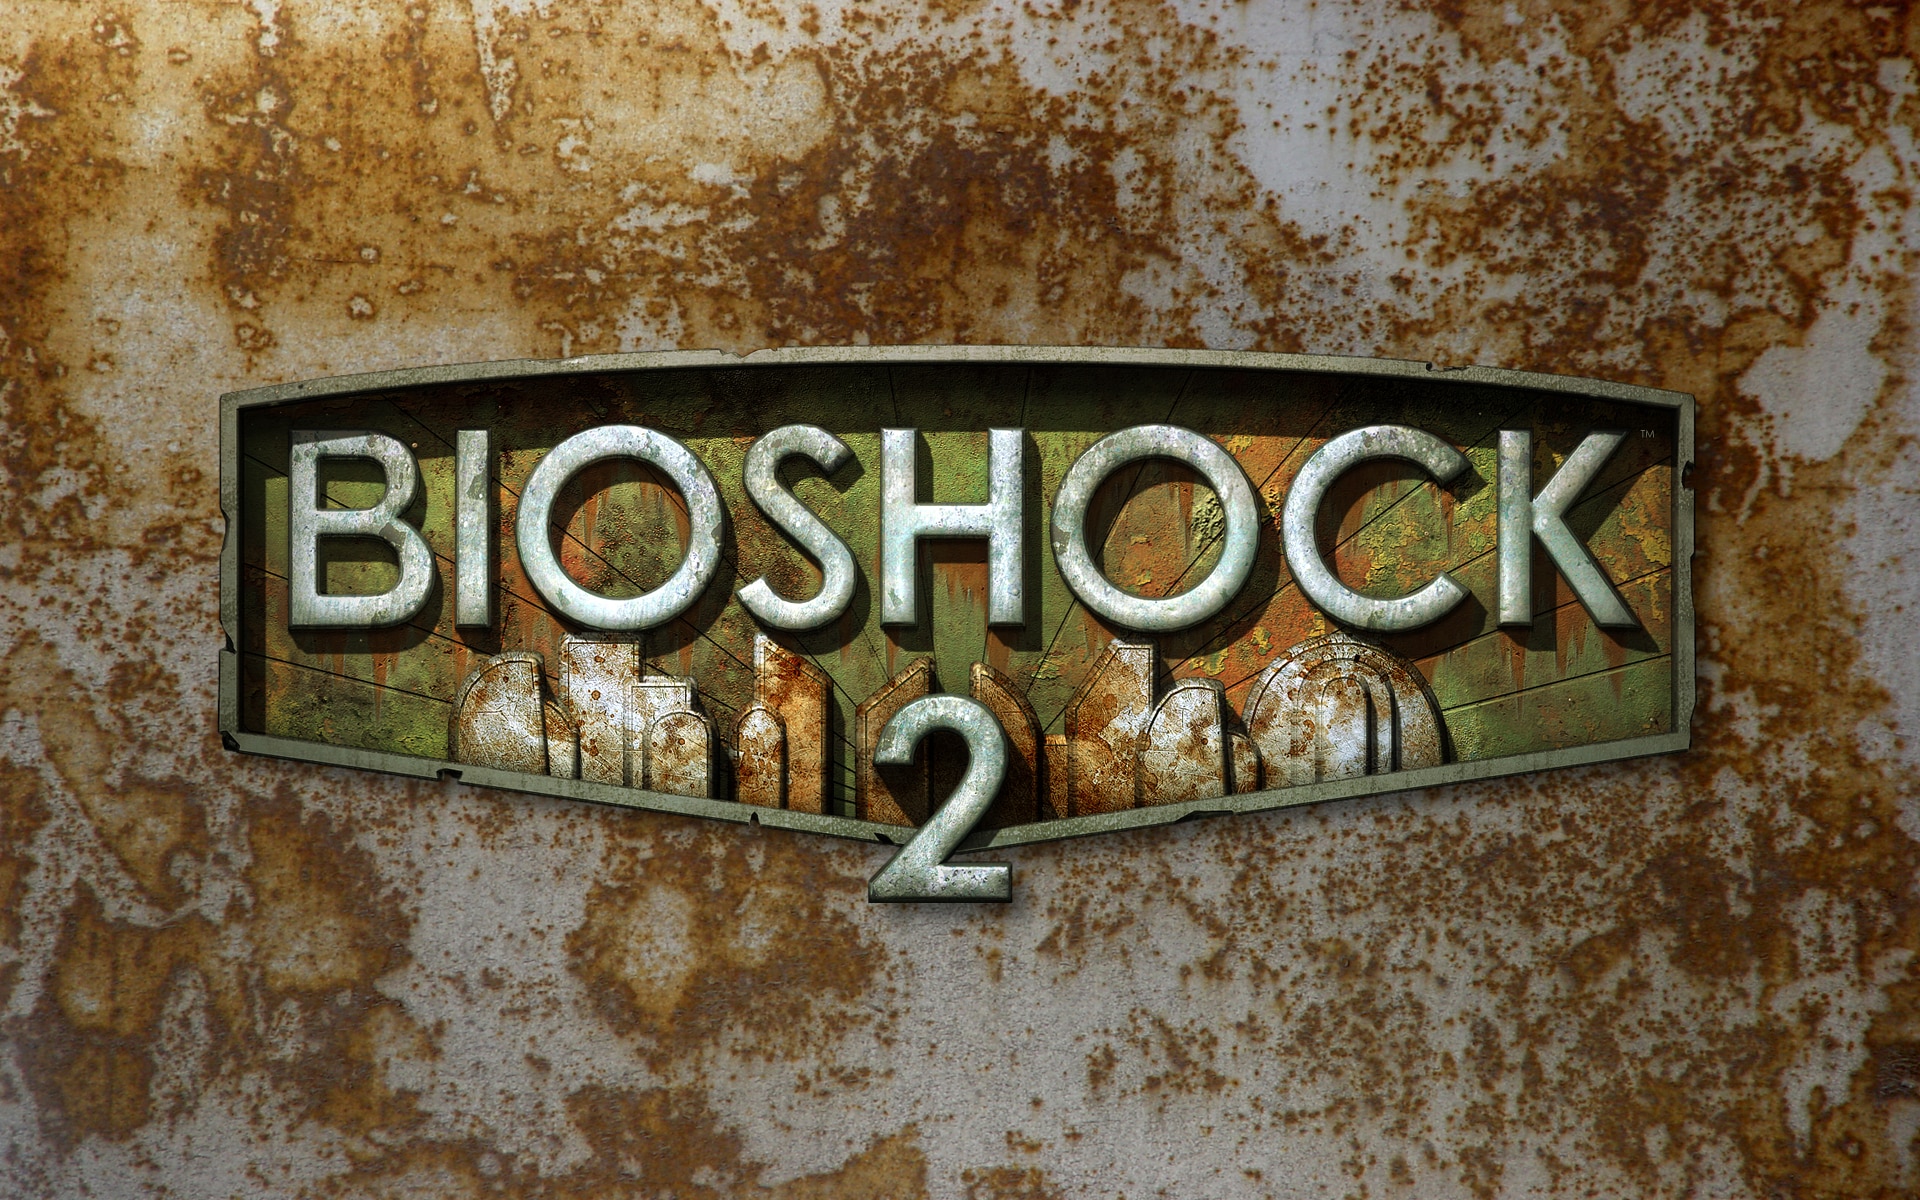 BioShock 2 wallpaper